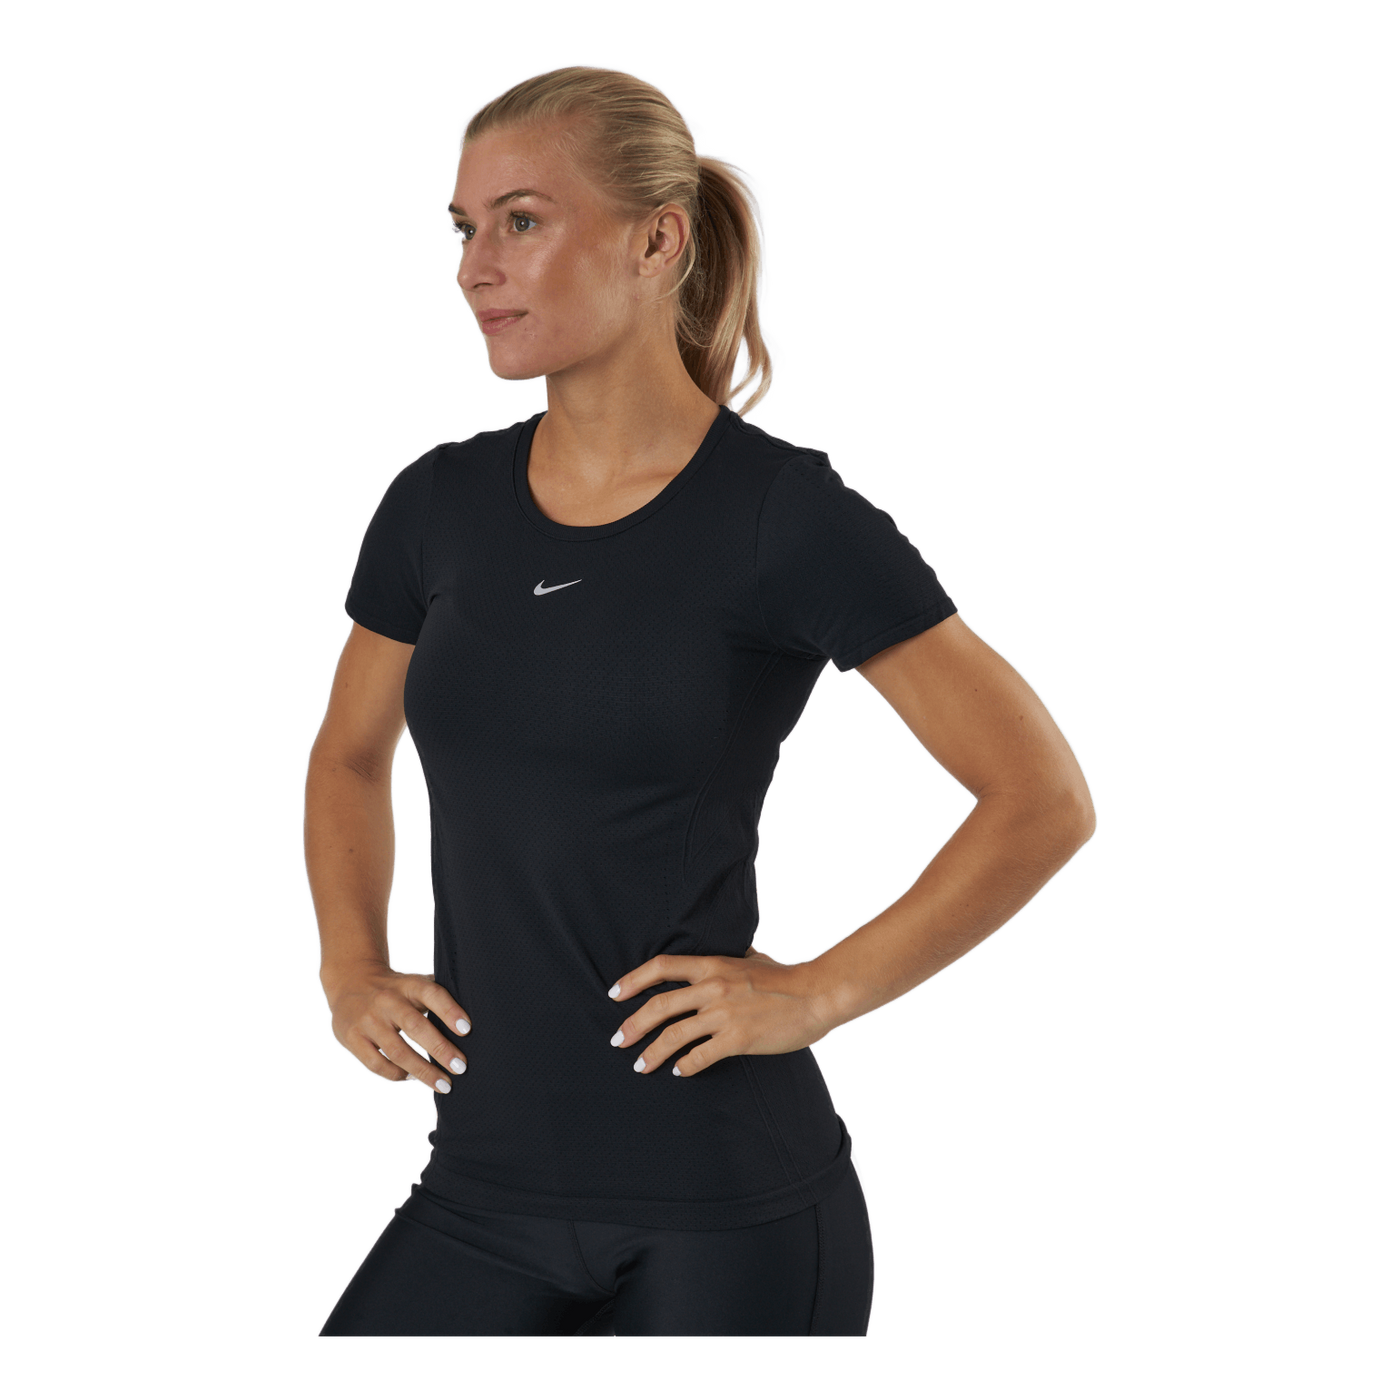 Dri-FIT ADV Aura Women's Slim-Fit Short-Sleeve Top BLACK/REFLECTIVE SILV